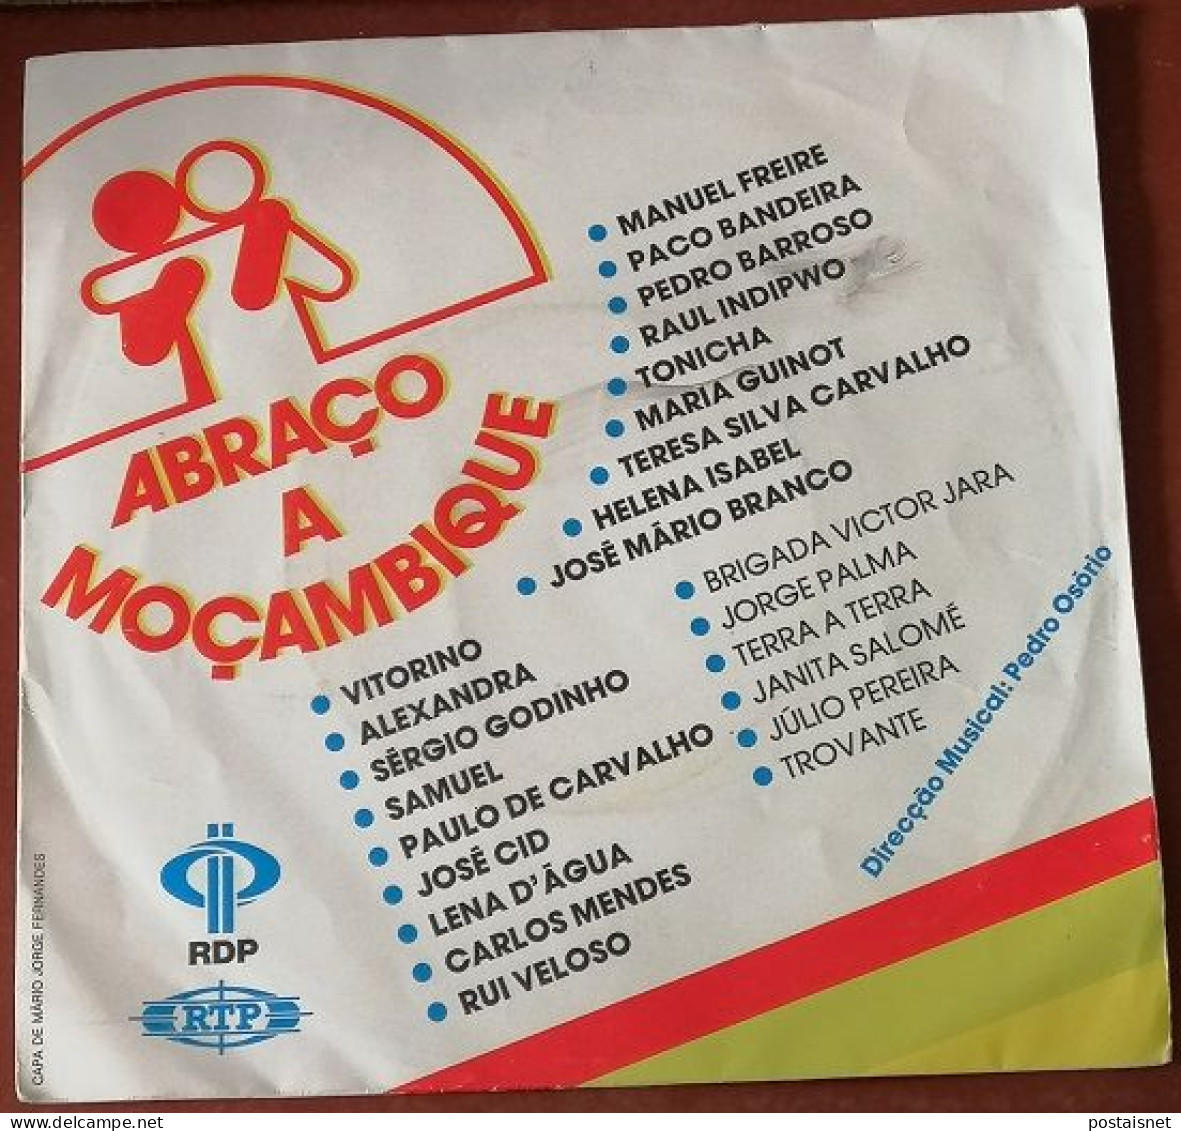 Single Abraço A Moçambique – 1985 – RDP E RTP - World Music